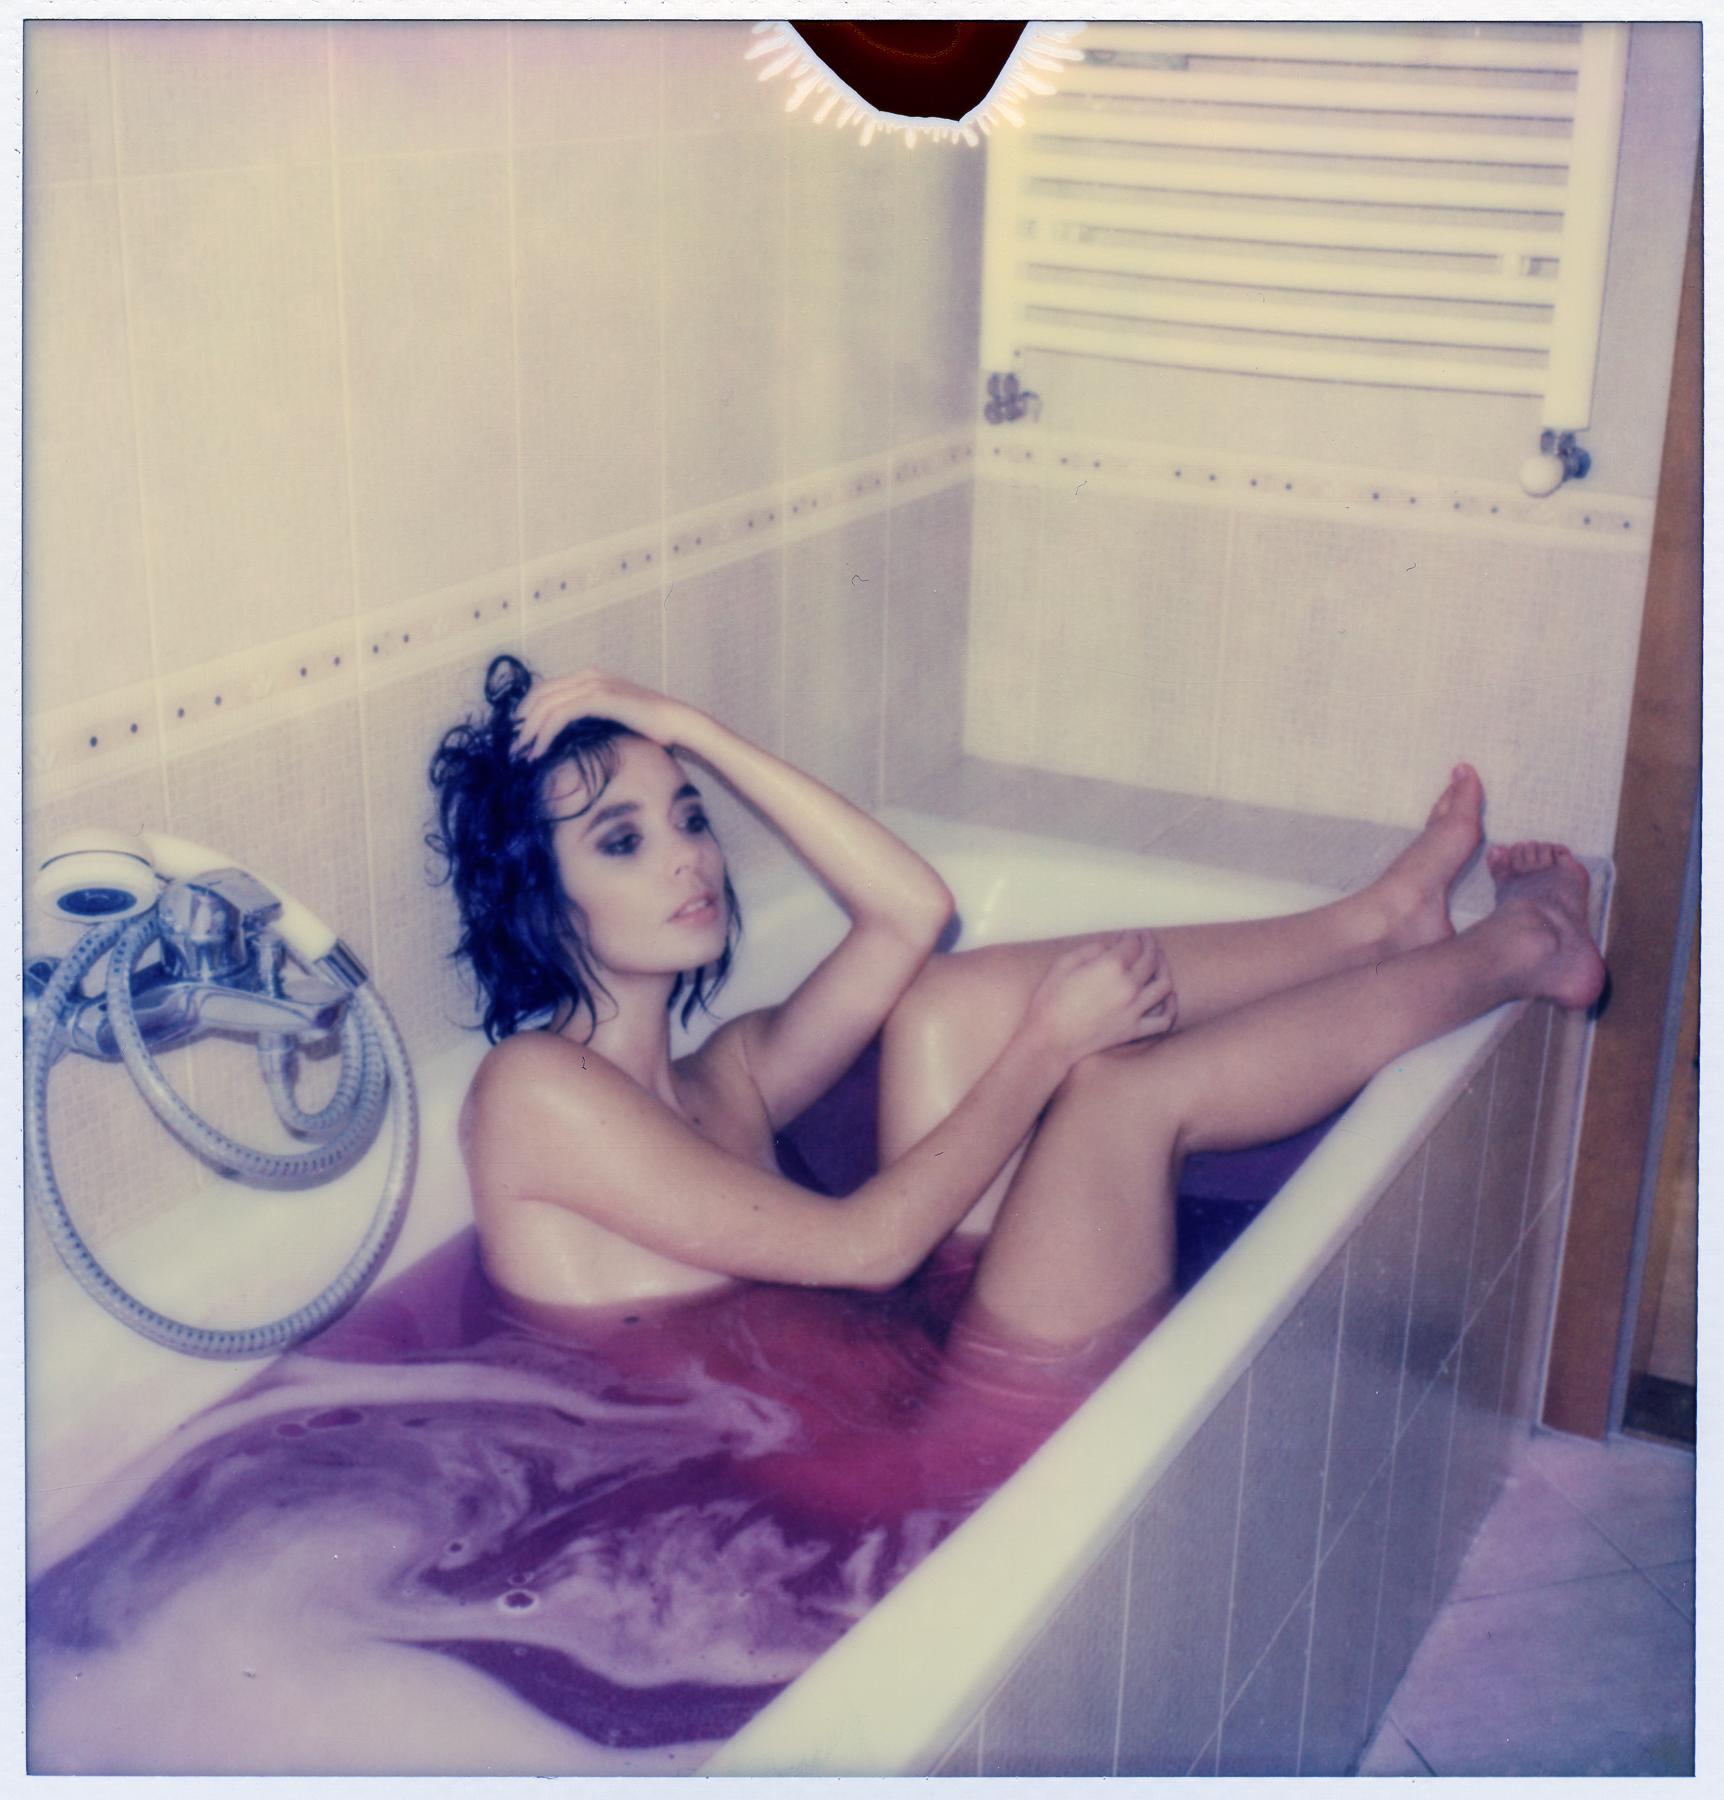 Bath Time Story III - 21st Century, Polaroid, Nude Photography, Contemporary